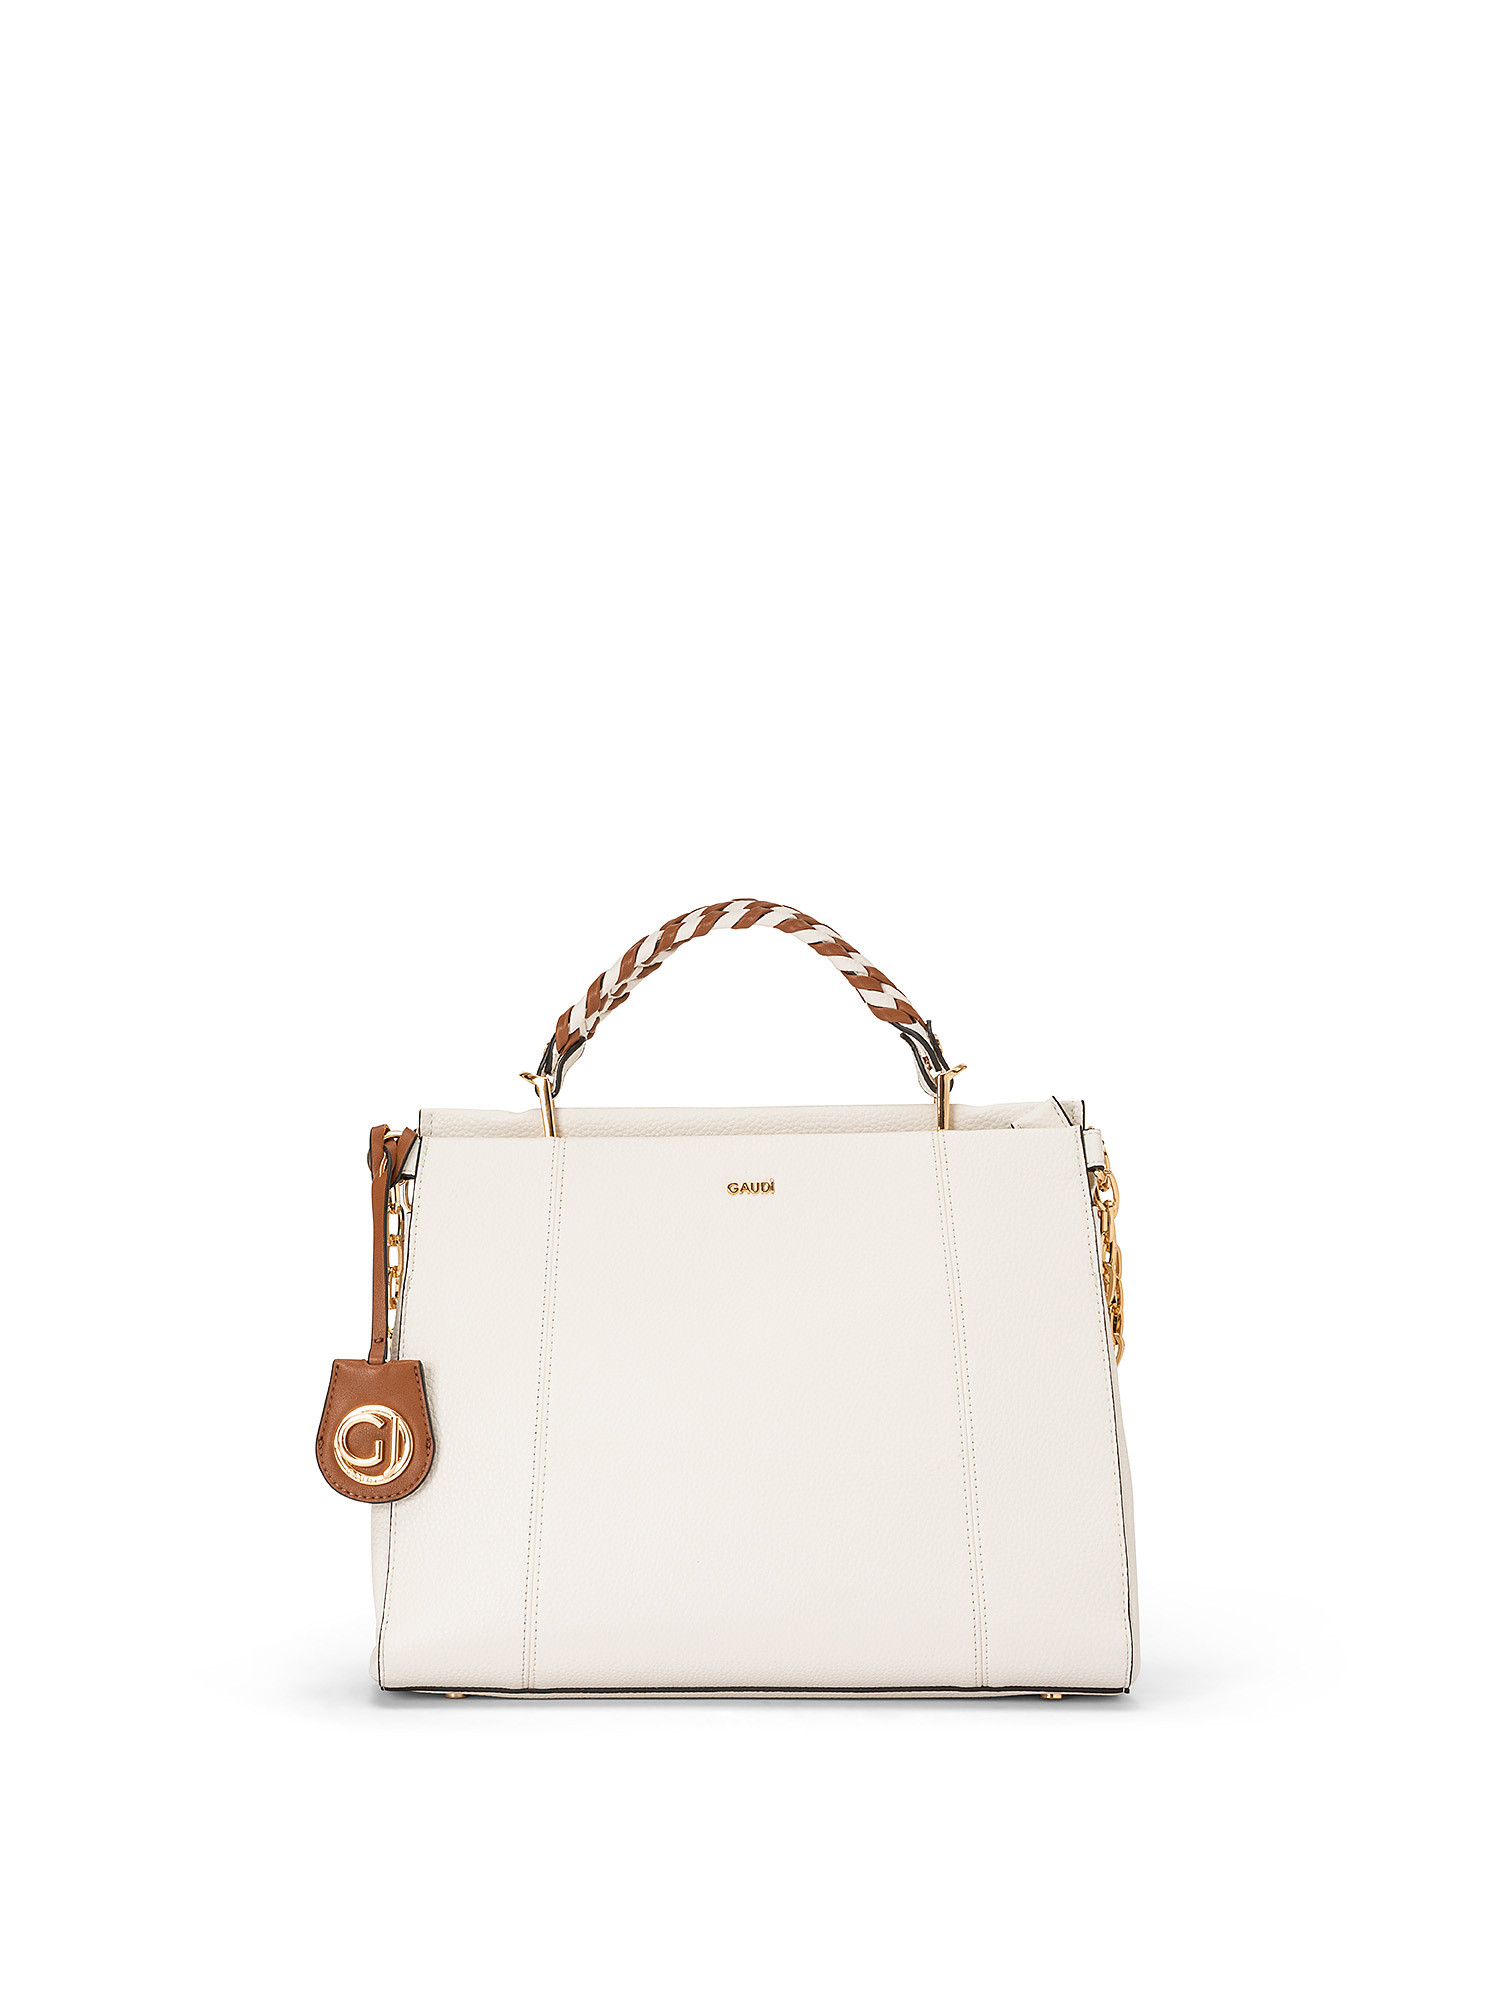 Zea handbag, White, large image number 0